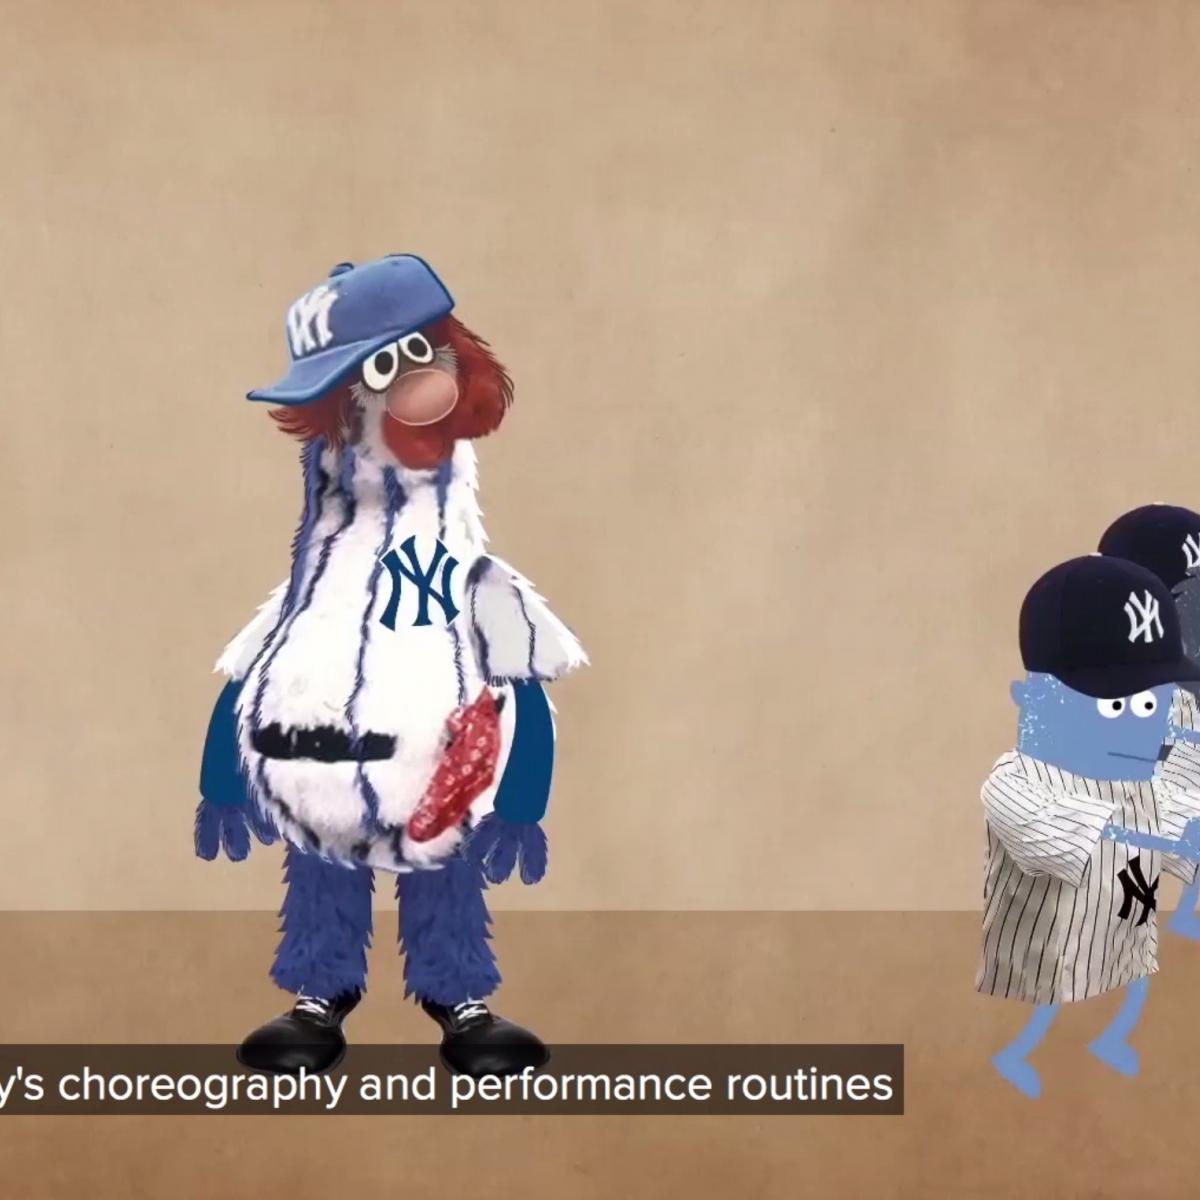 Wait, the Yankees actually had a mascot? #TallTales